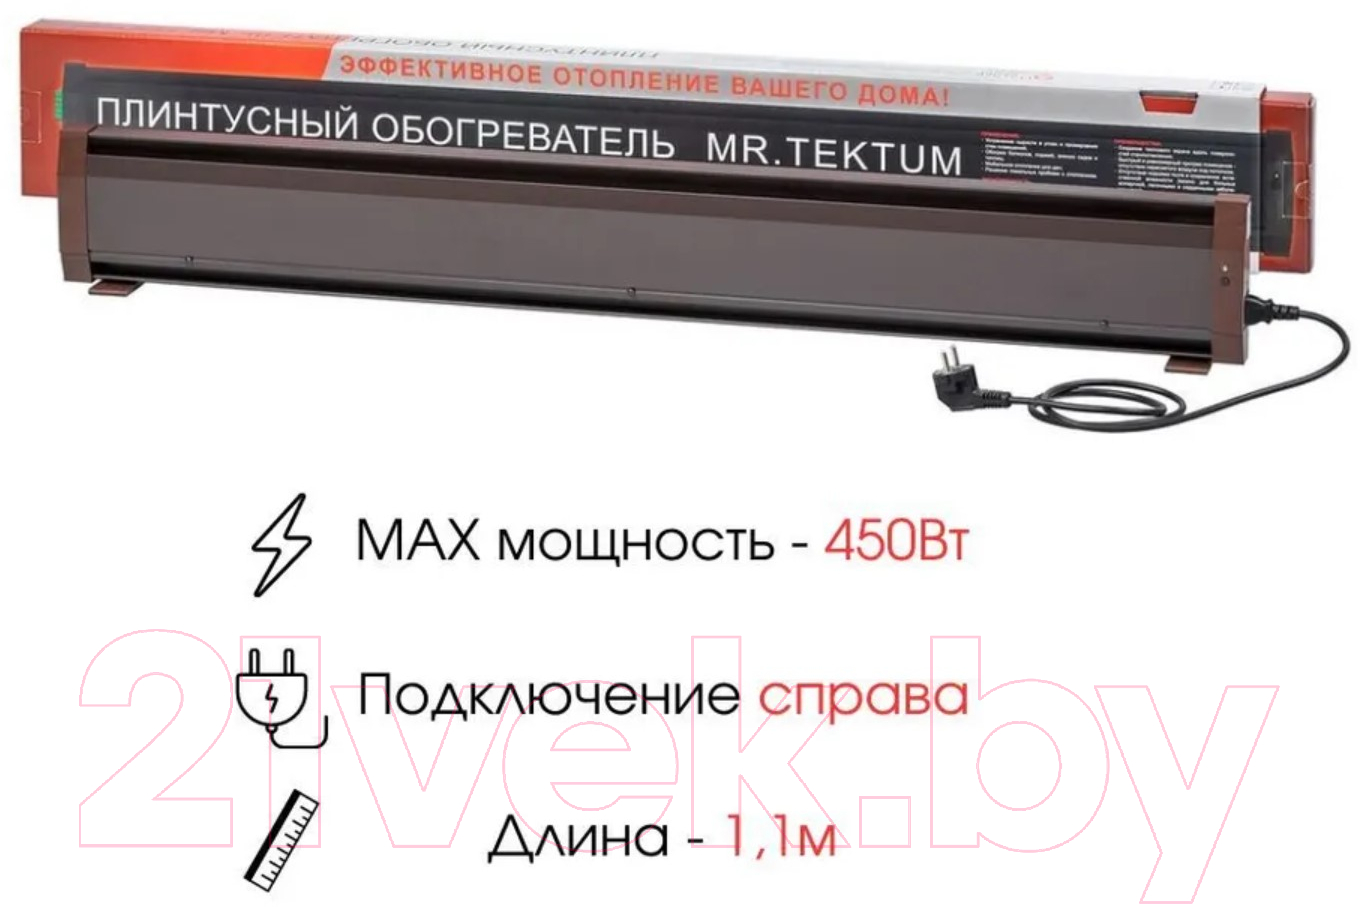 Теплый плинтус электрический Mr.Tektum Smart Line 1.1м правый